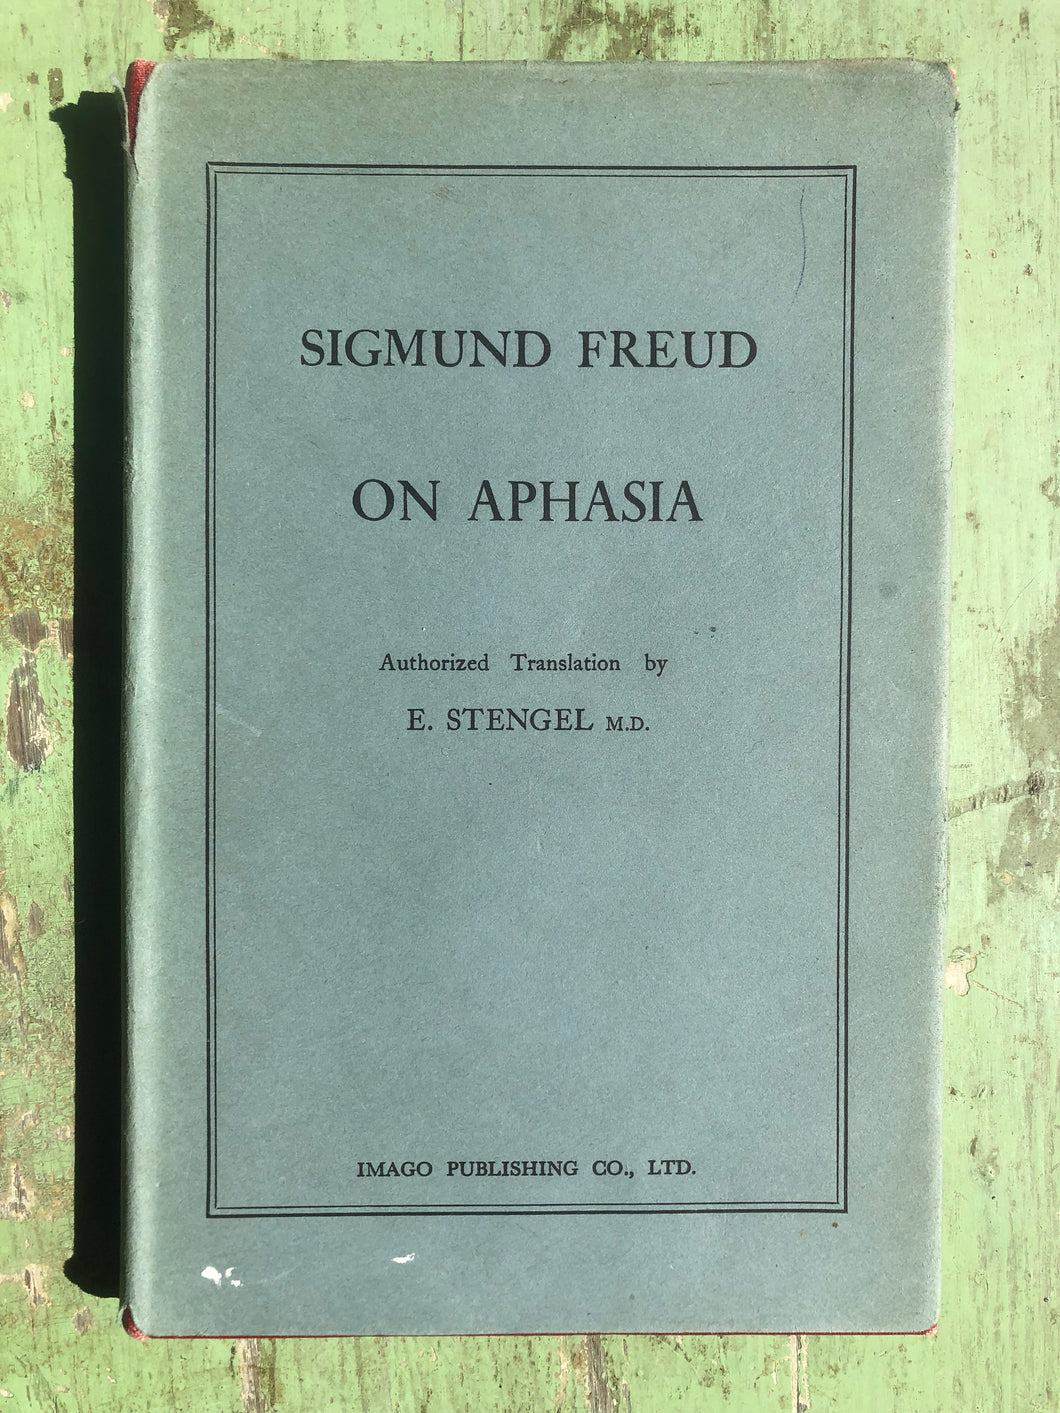 On Aphasia: A Critical Study by Sigmund Freud. Authorized translation by E. Stengel